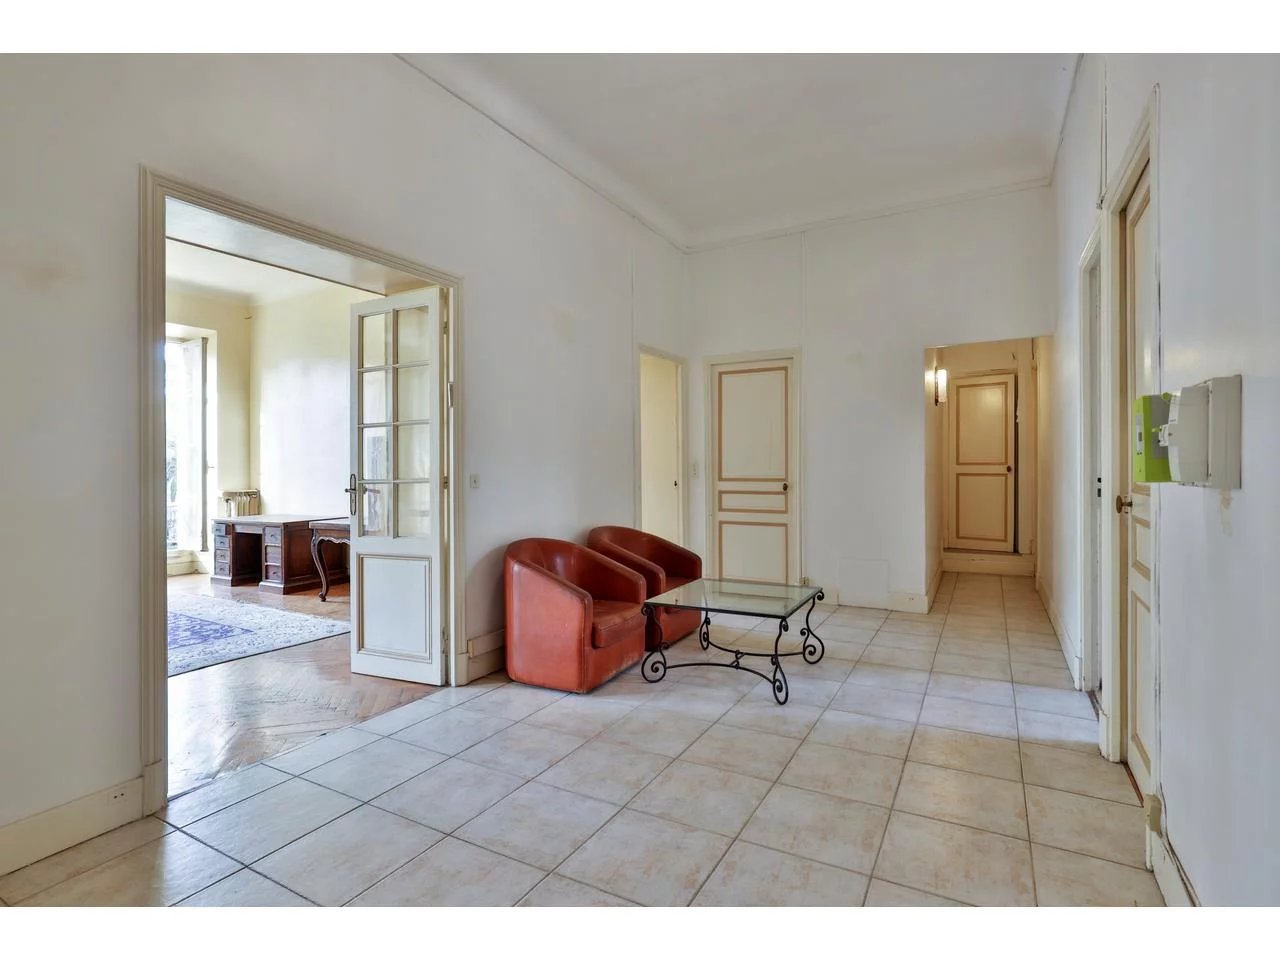 Appartement  4 Locali 125.45m2  In vendita   945 000 €